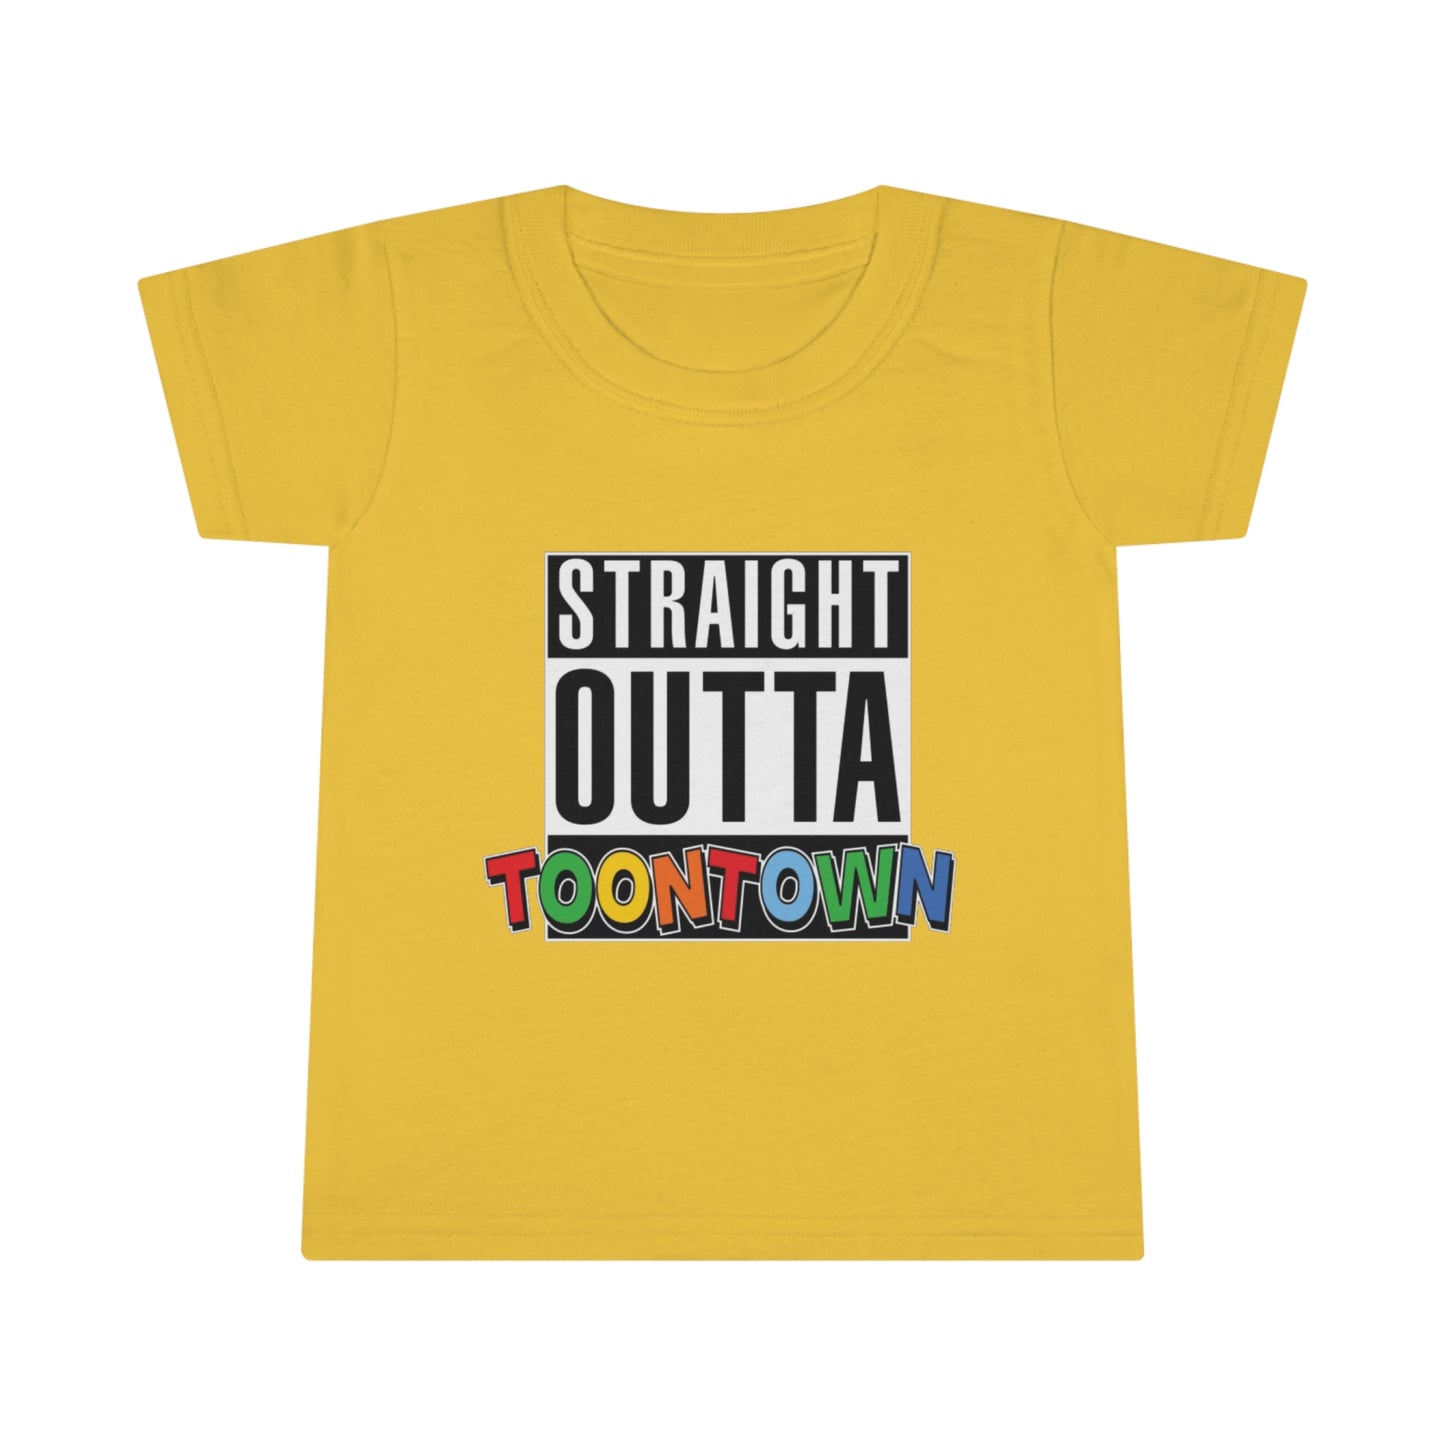 Toddler toon town T-shirt